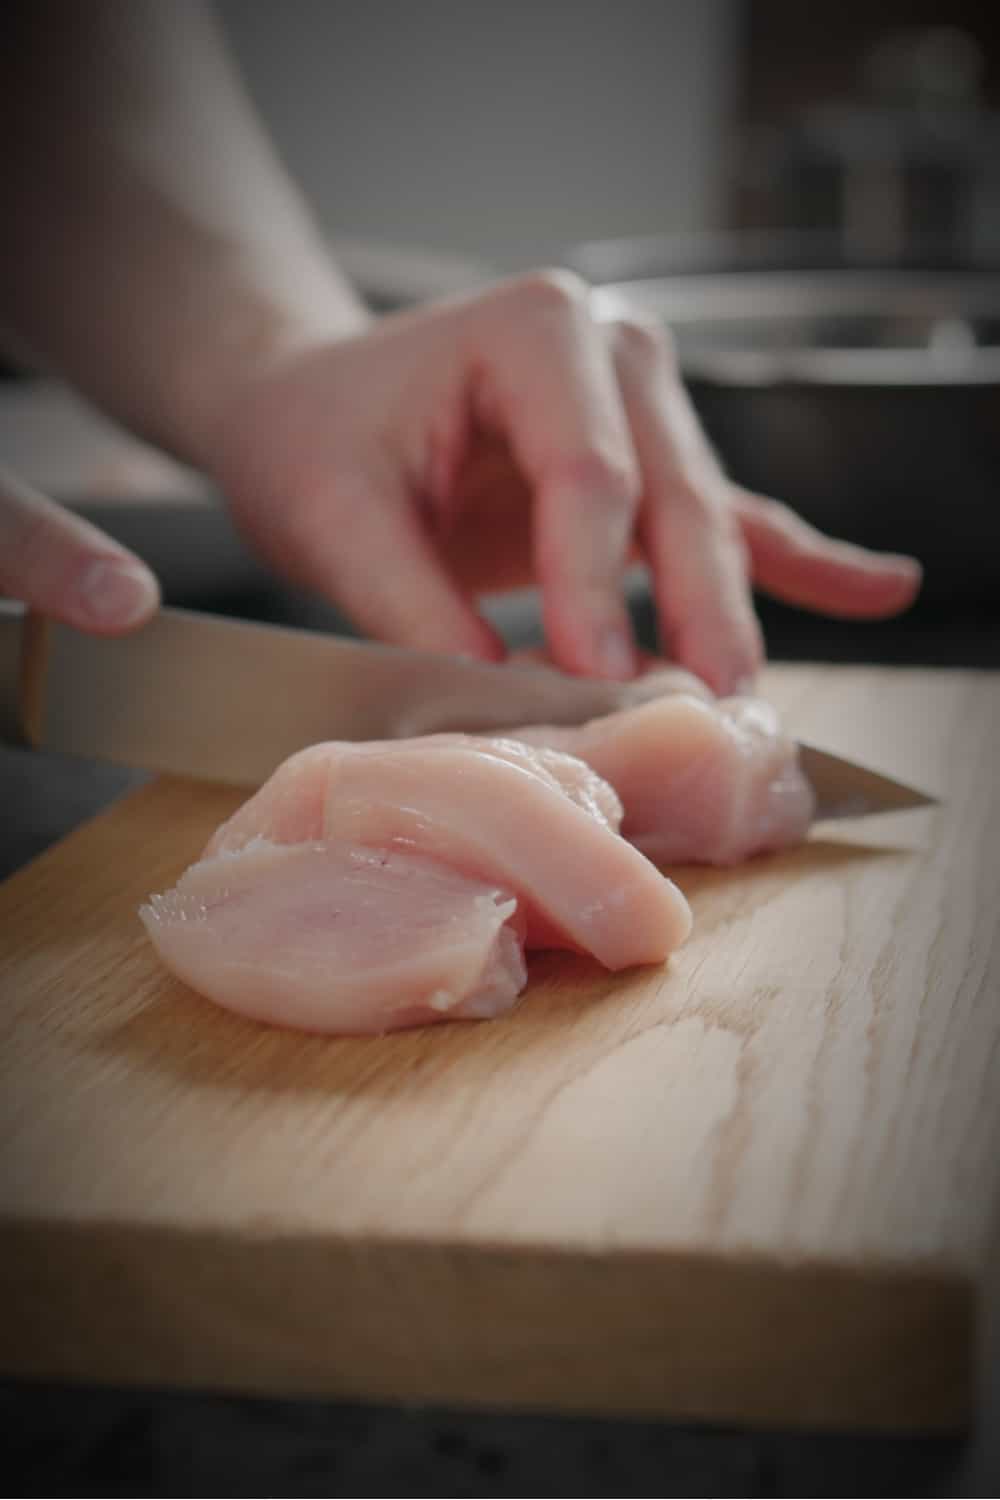 a woman cuts a chicken on a cutting board